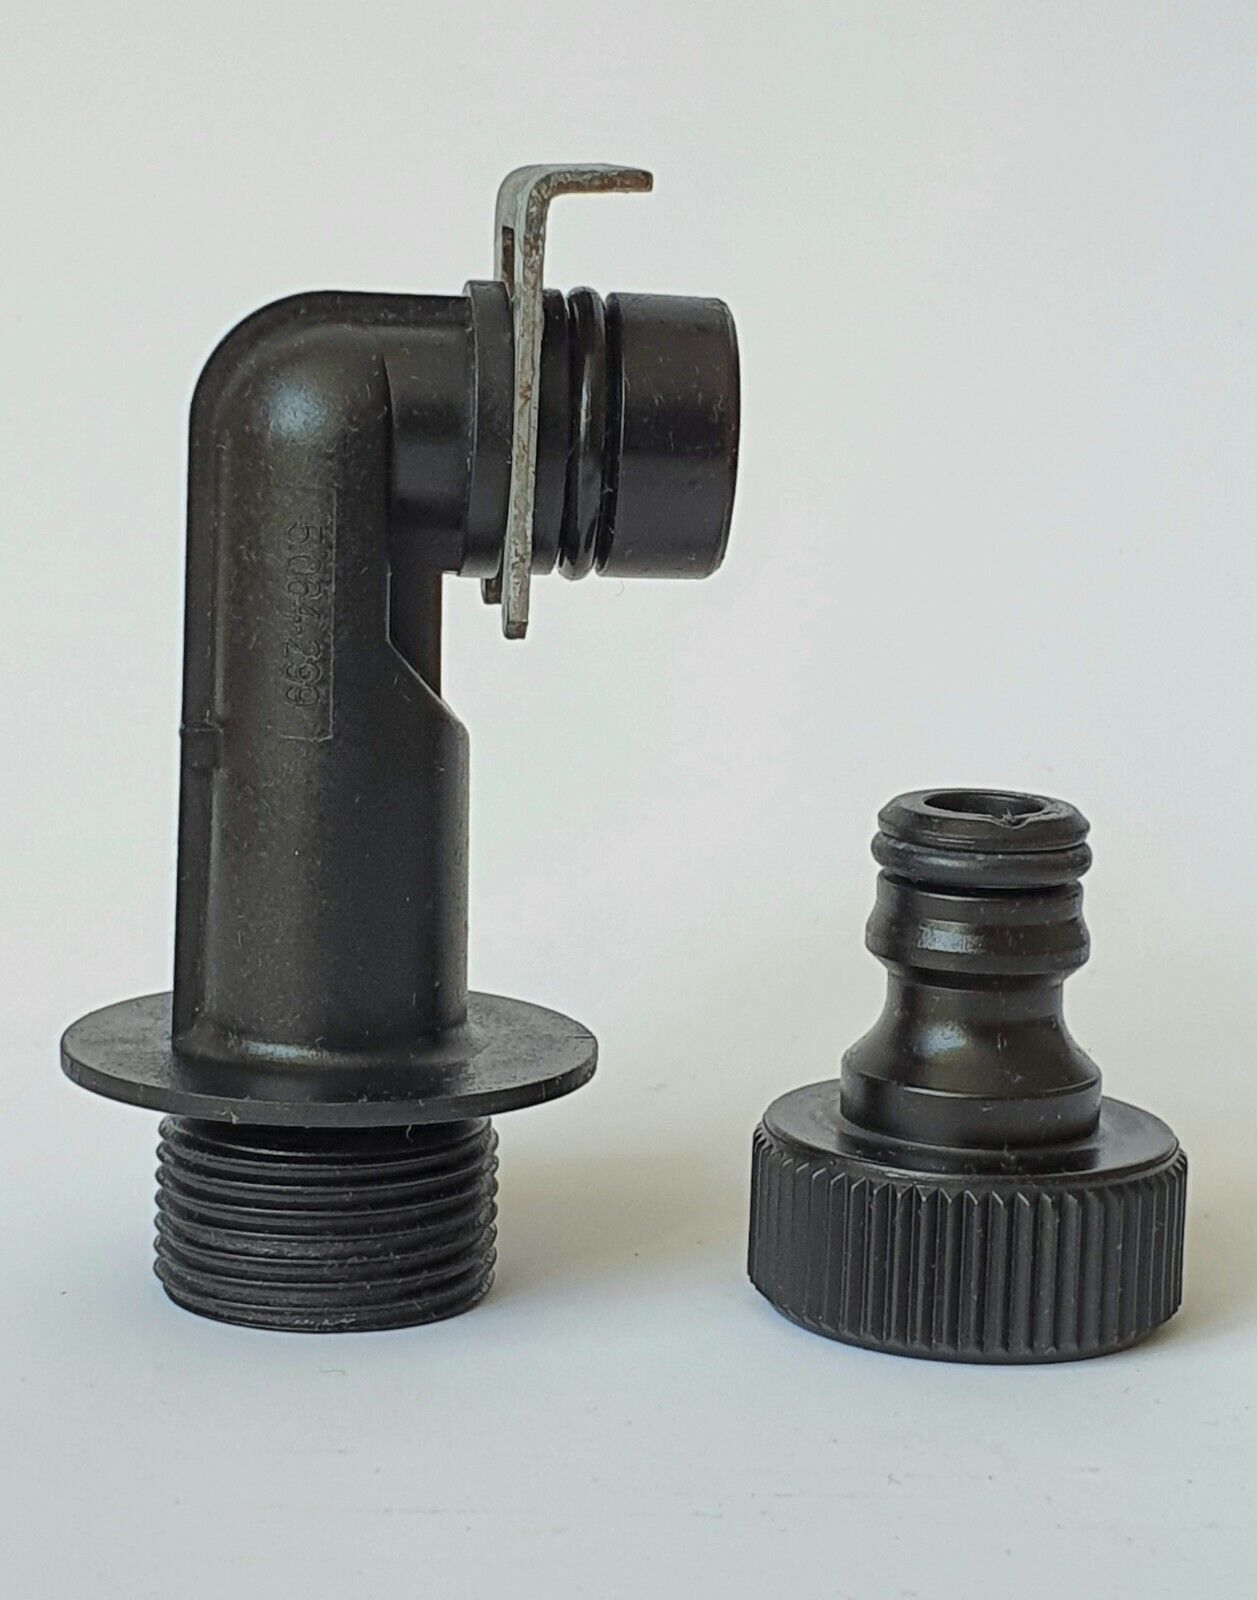 Original Karcher K2 Pressure Washer Parts & Accessories in Good Used Condition